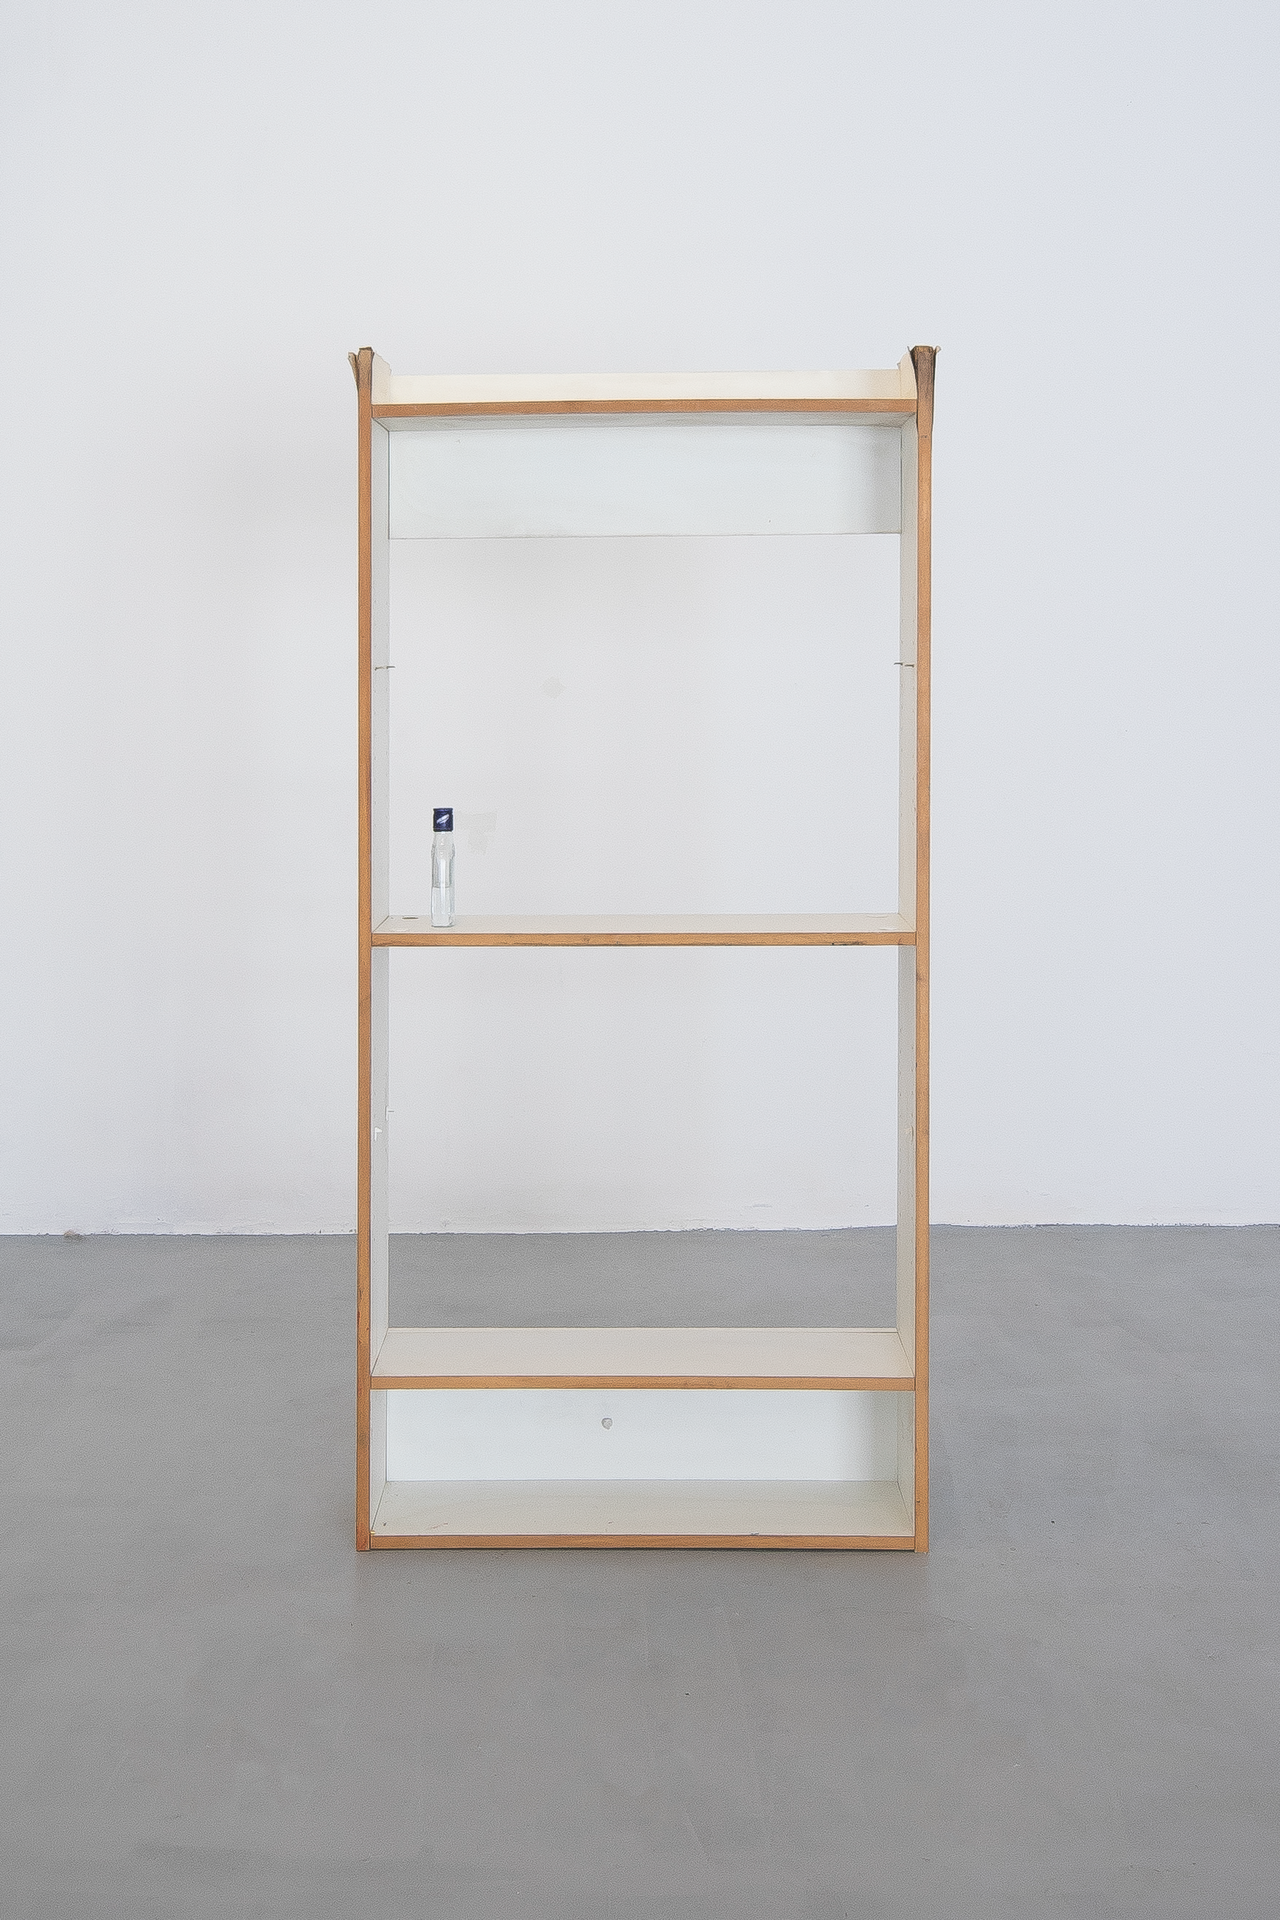 Hugo Bausch Belbachir, Untitled (Cabinet), Wood cabinet, Poliakov #ask, 170 x 70 x 25 cm, 66 7/8 x 27 1/2 x 9 7/8 inches.